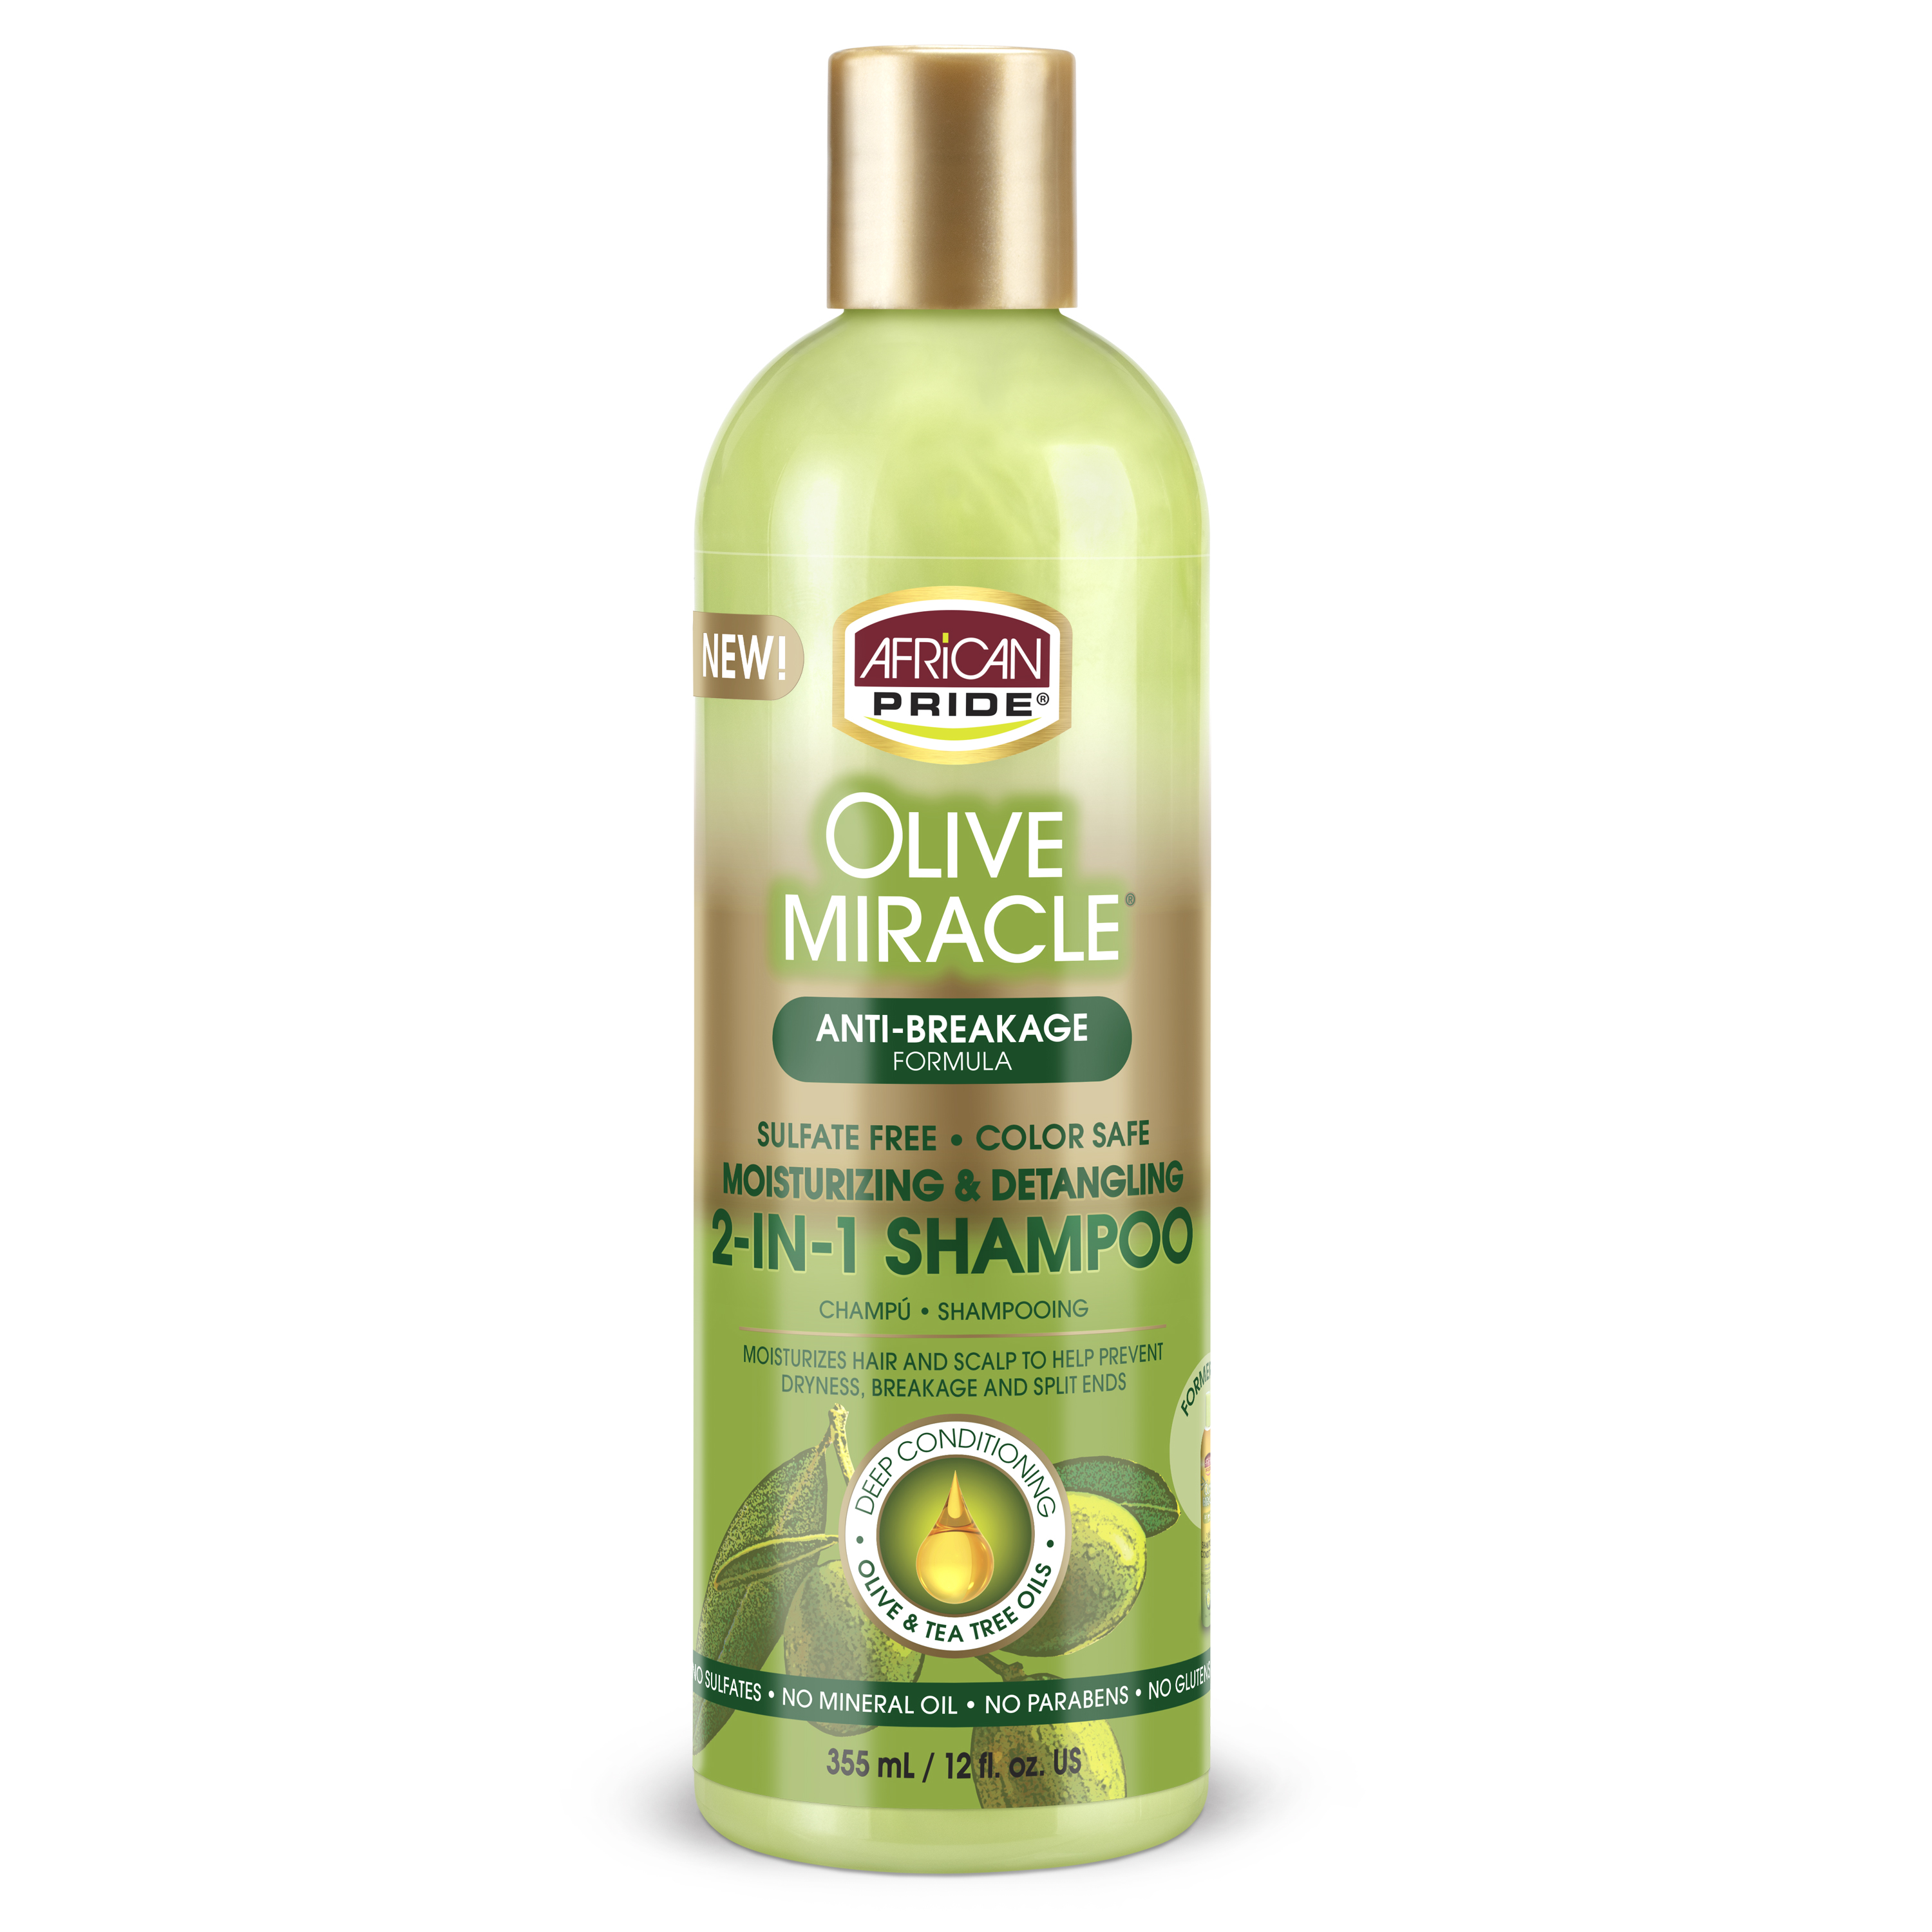 African Pride Olive Miracle Detangling Moisturizing Anti-Breakage Formula 2-in-1 Shampoo Plus Conditioner, 12 fl oz - image 1 of 7